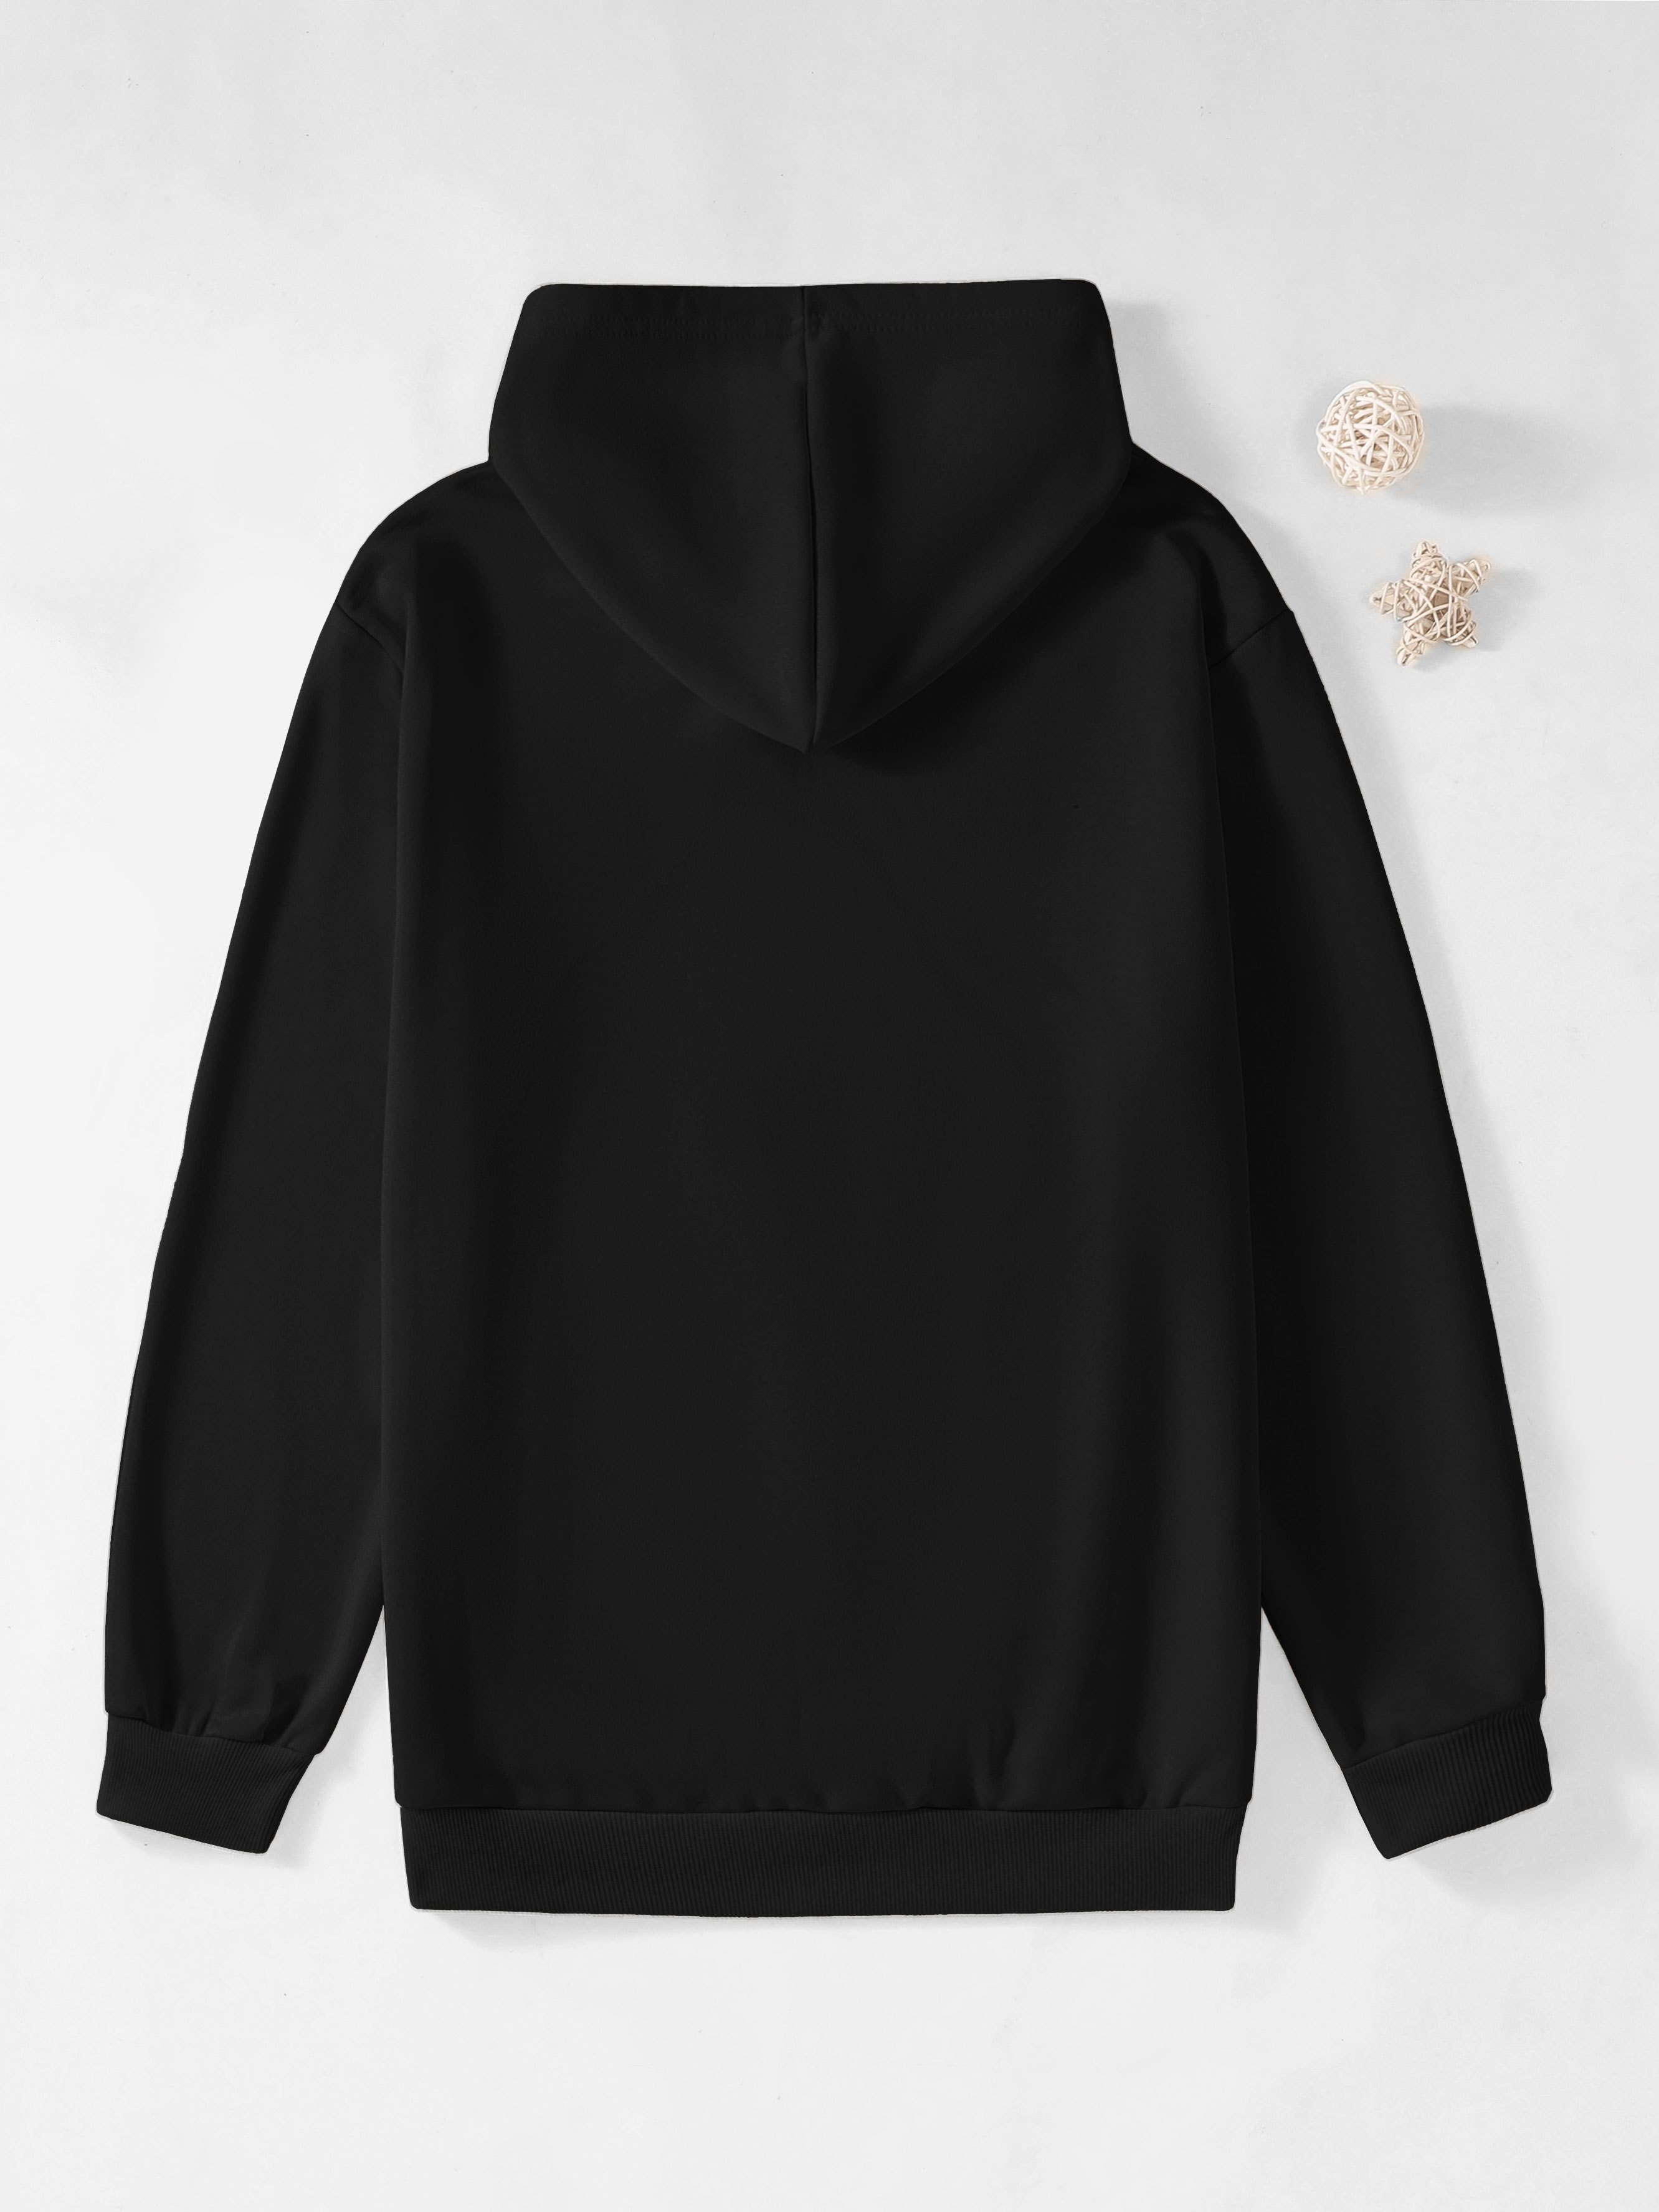 l love NY Sweatshirts — Gift-Man